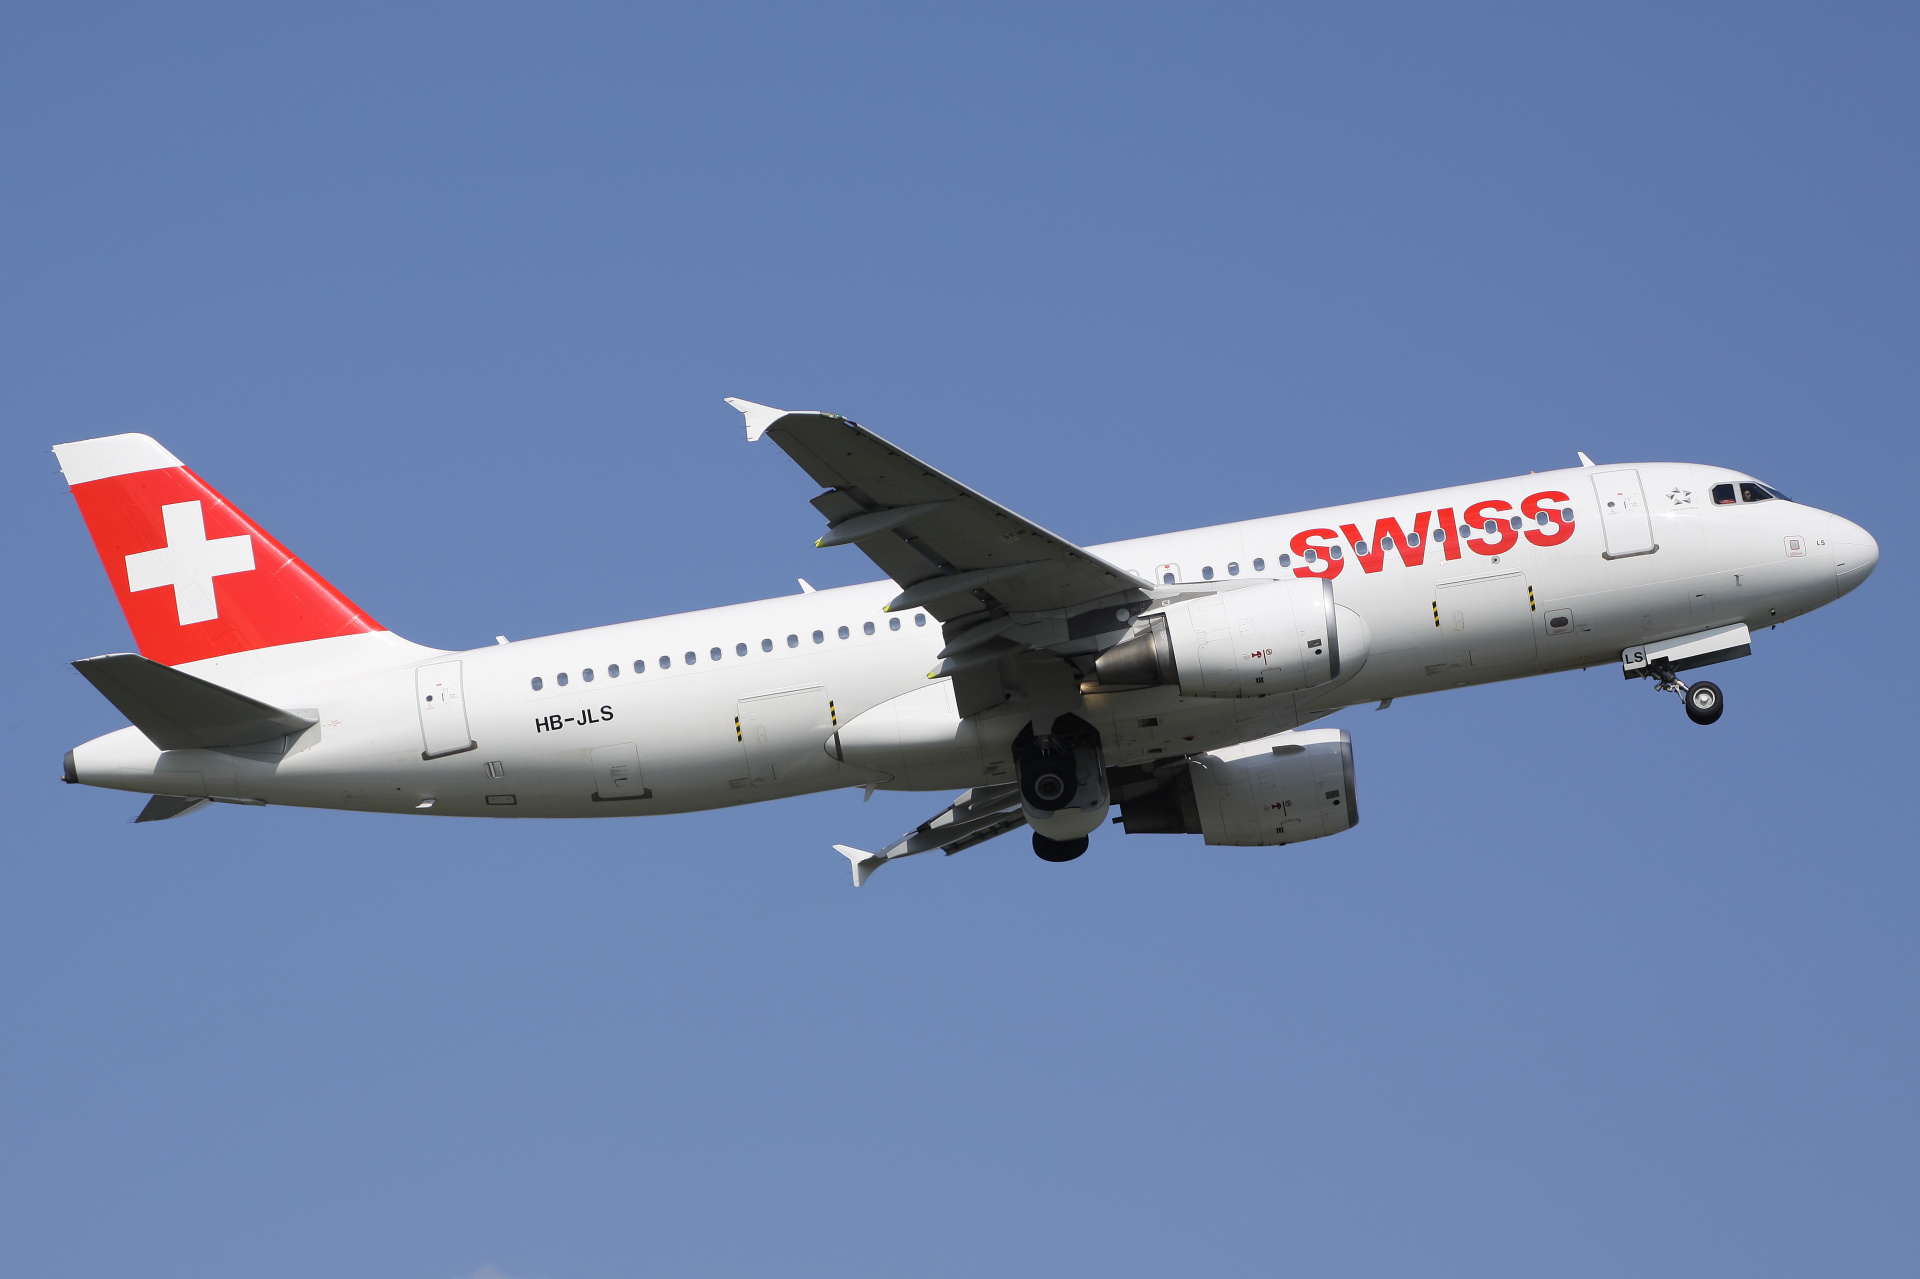 HB-JLS (Aircraft » EPWA Spotting » Airbus A320-200 » Swiss International Air Lines)